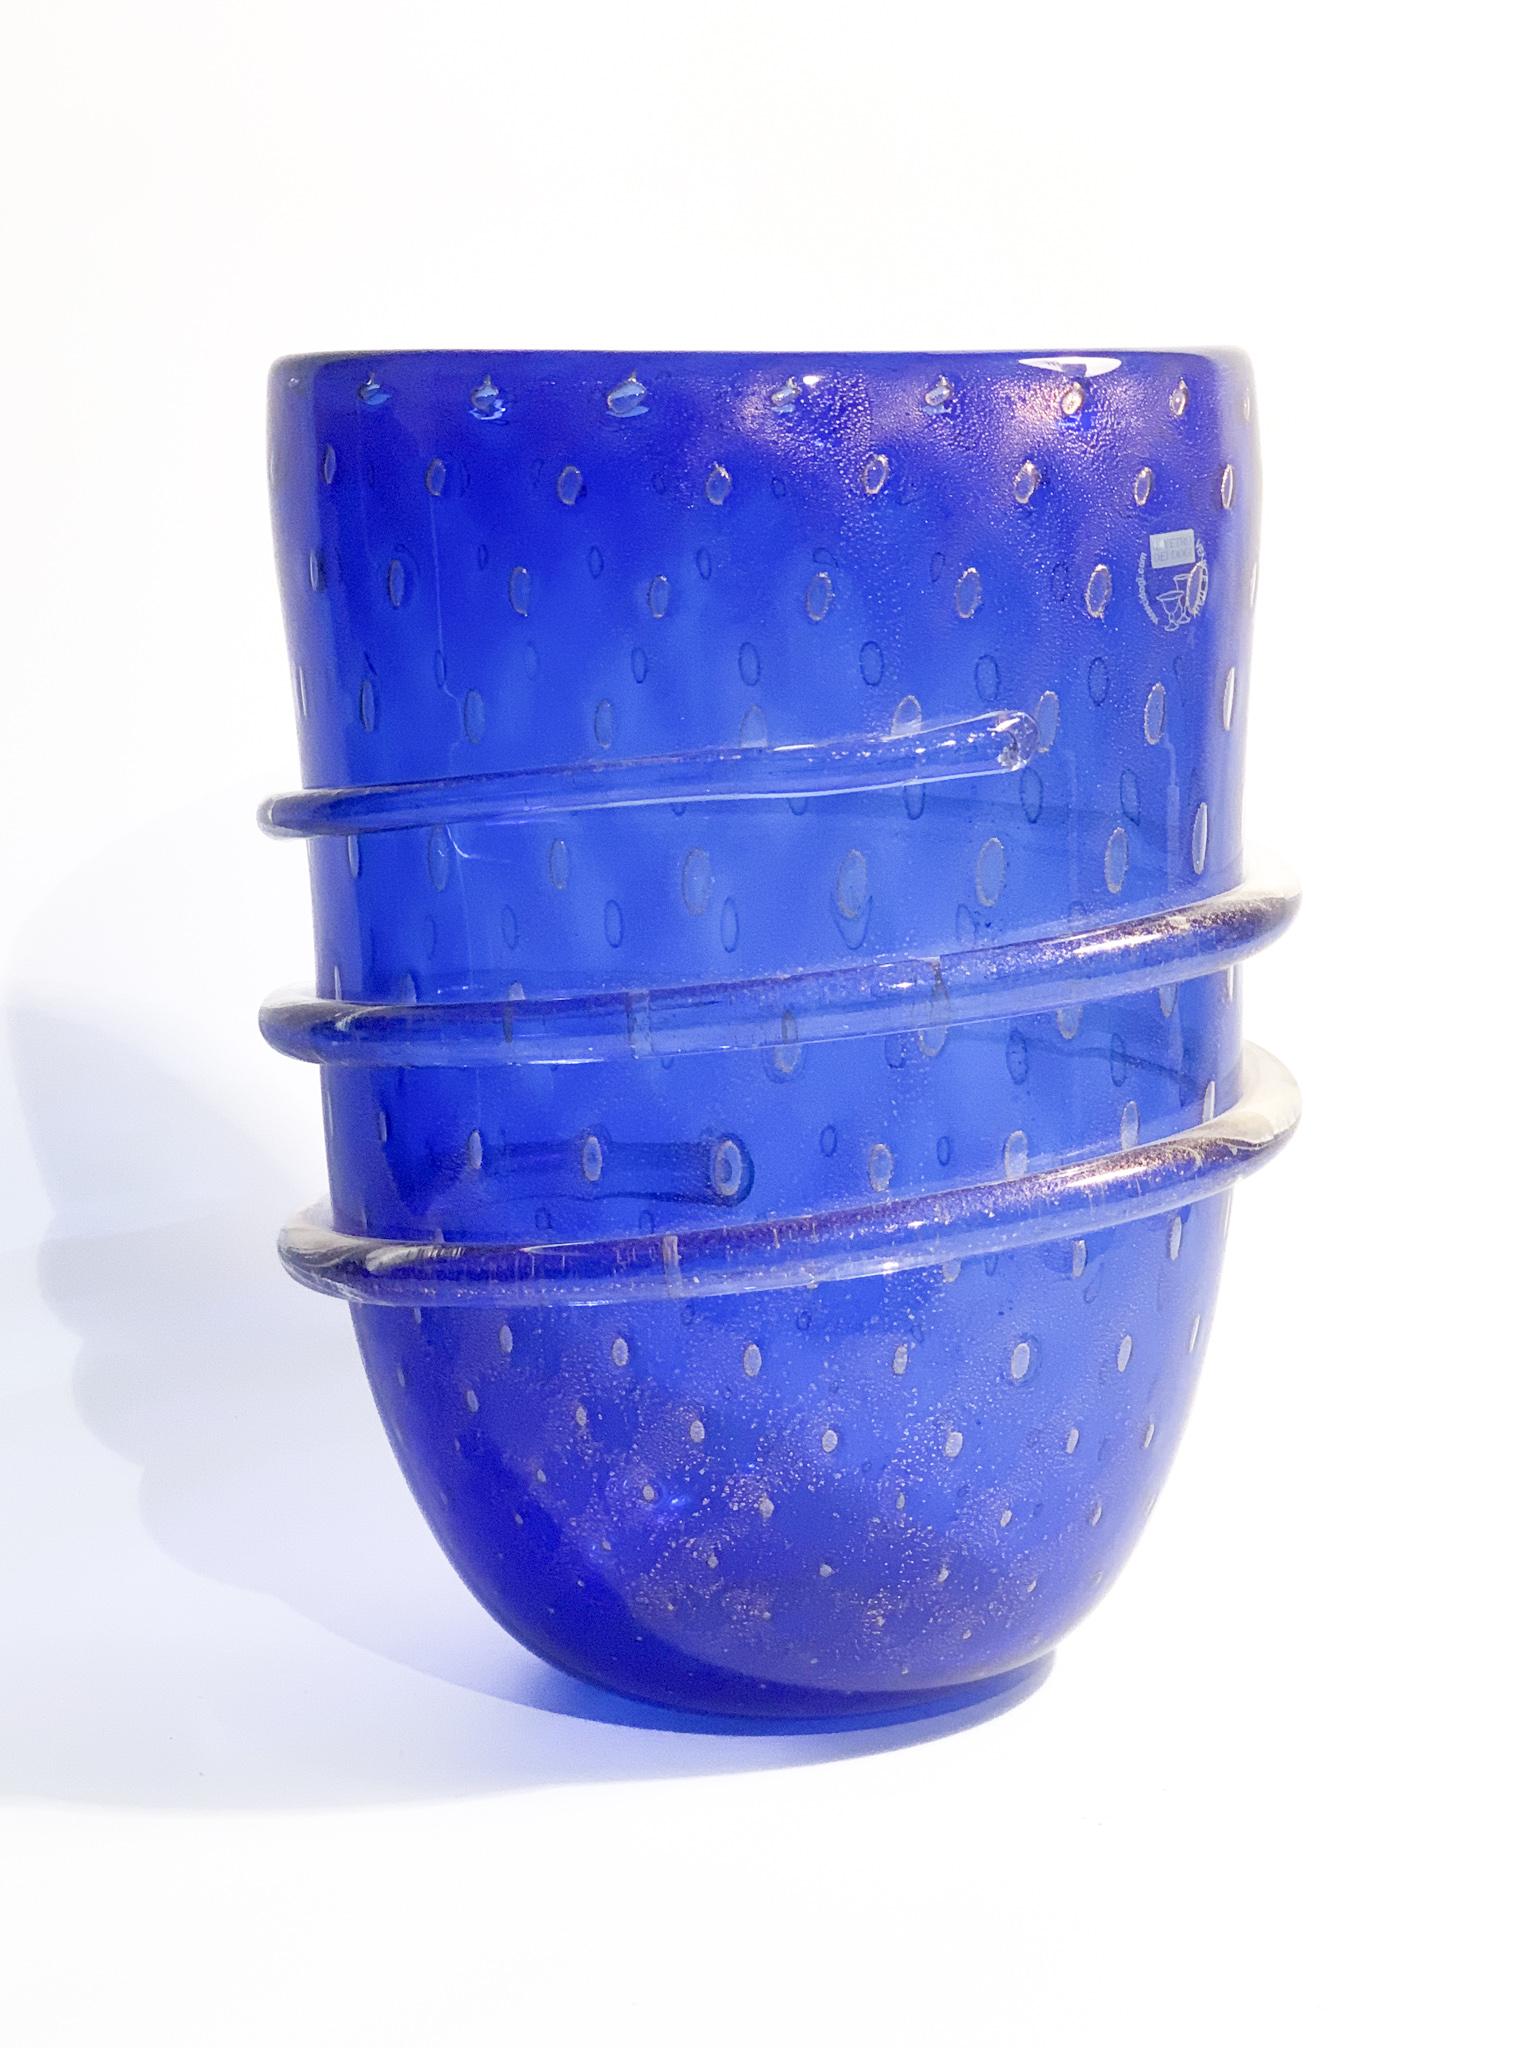 Deep blue Vetro dei Dogi Murano glass vase with gold work, made in the 1980s

Ø 17 cm Ø 13 cm h 23 cm